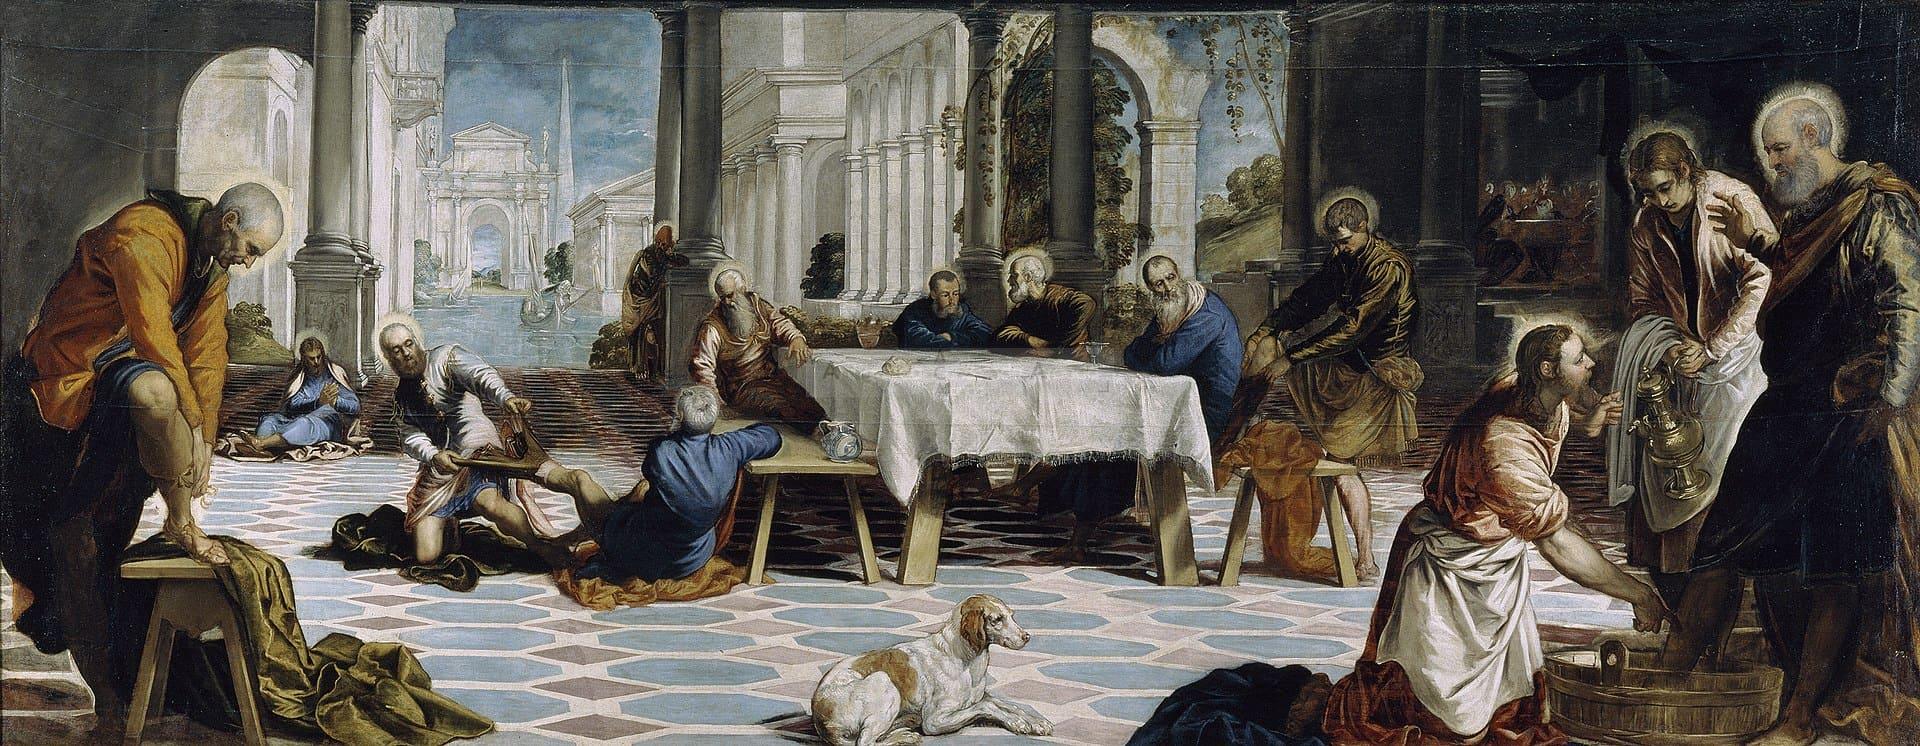 El Lavatorio - Tintoretto